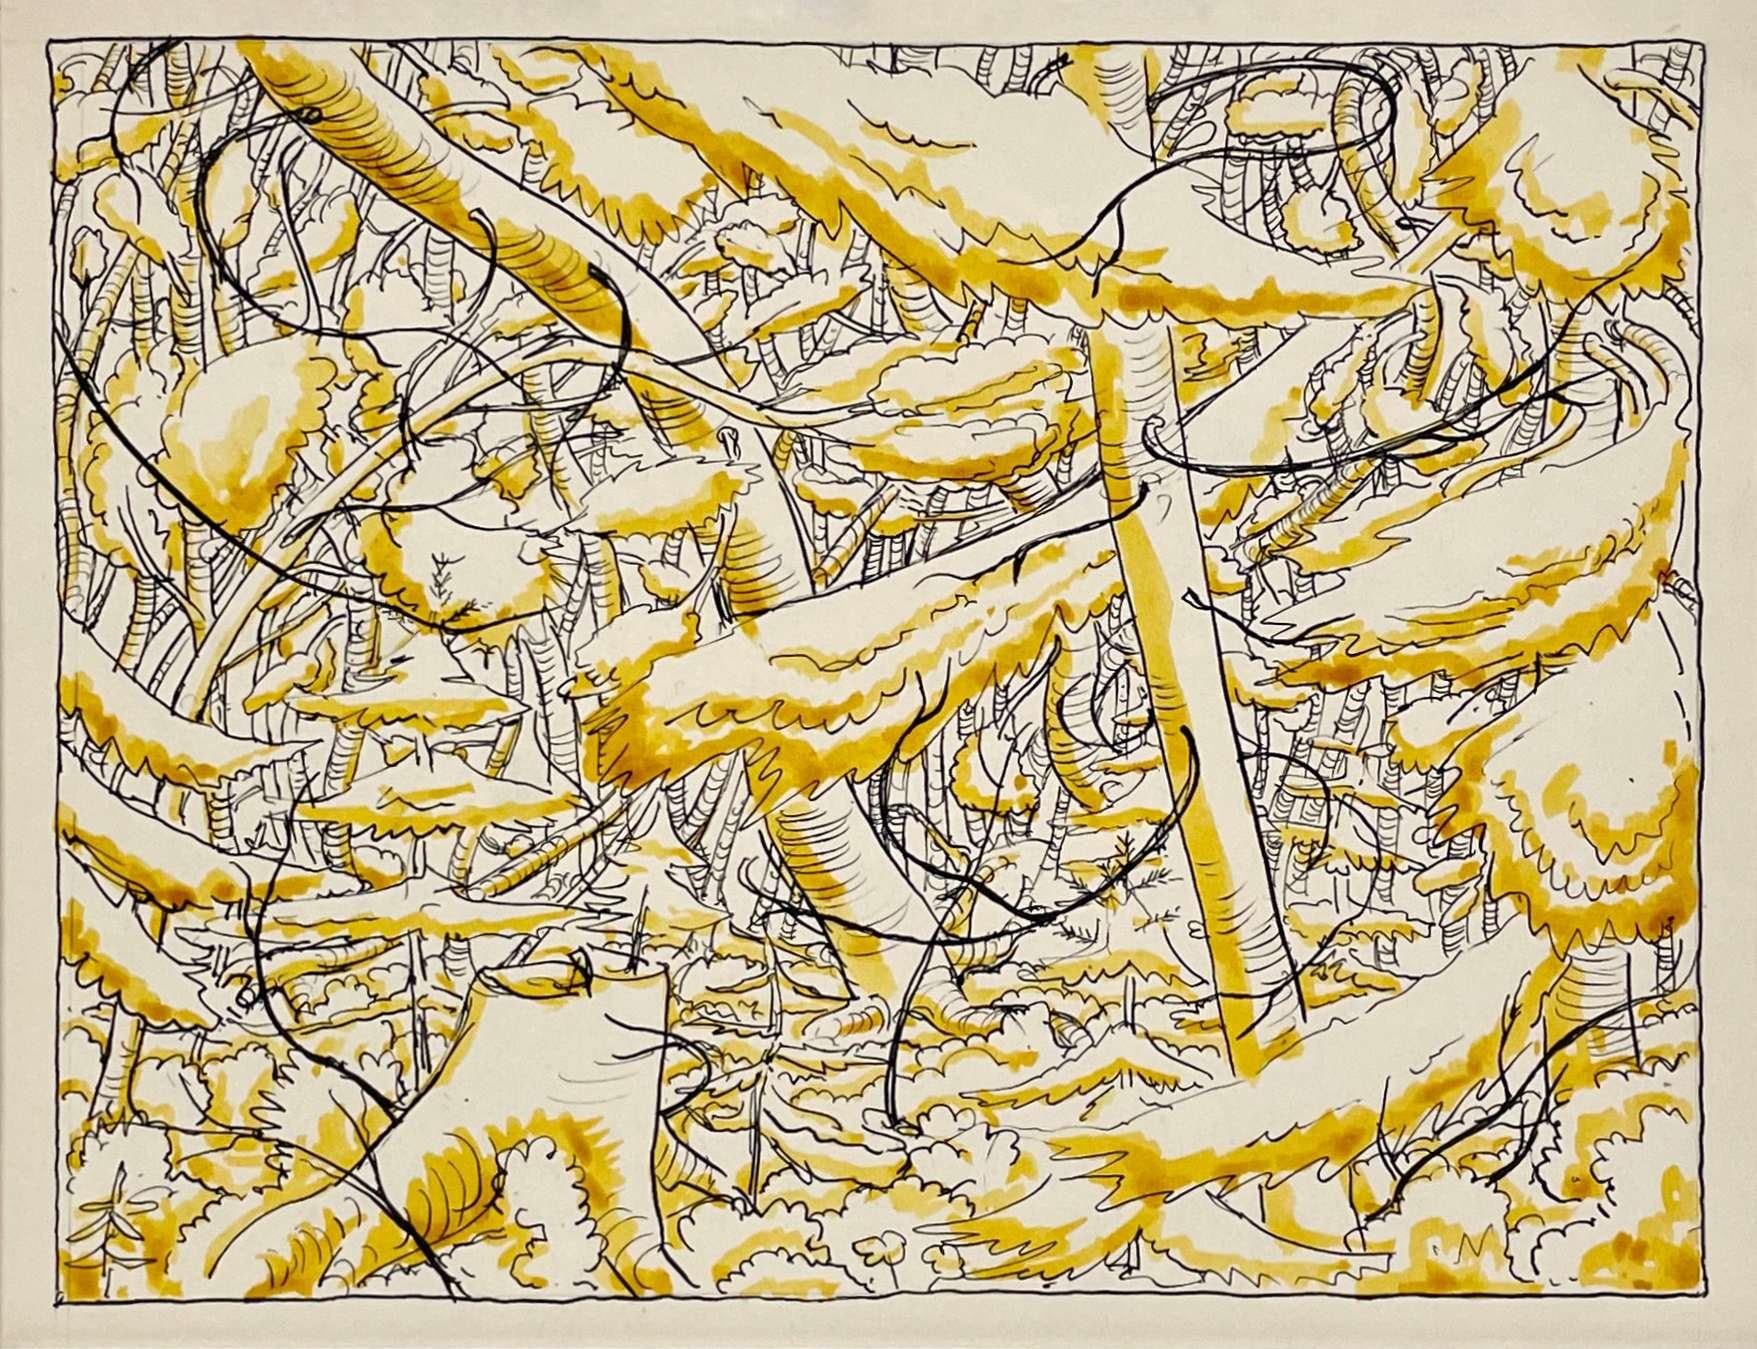 Scène de forêt jaune de l'artiste Harold Haydon